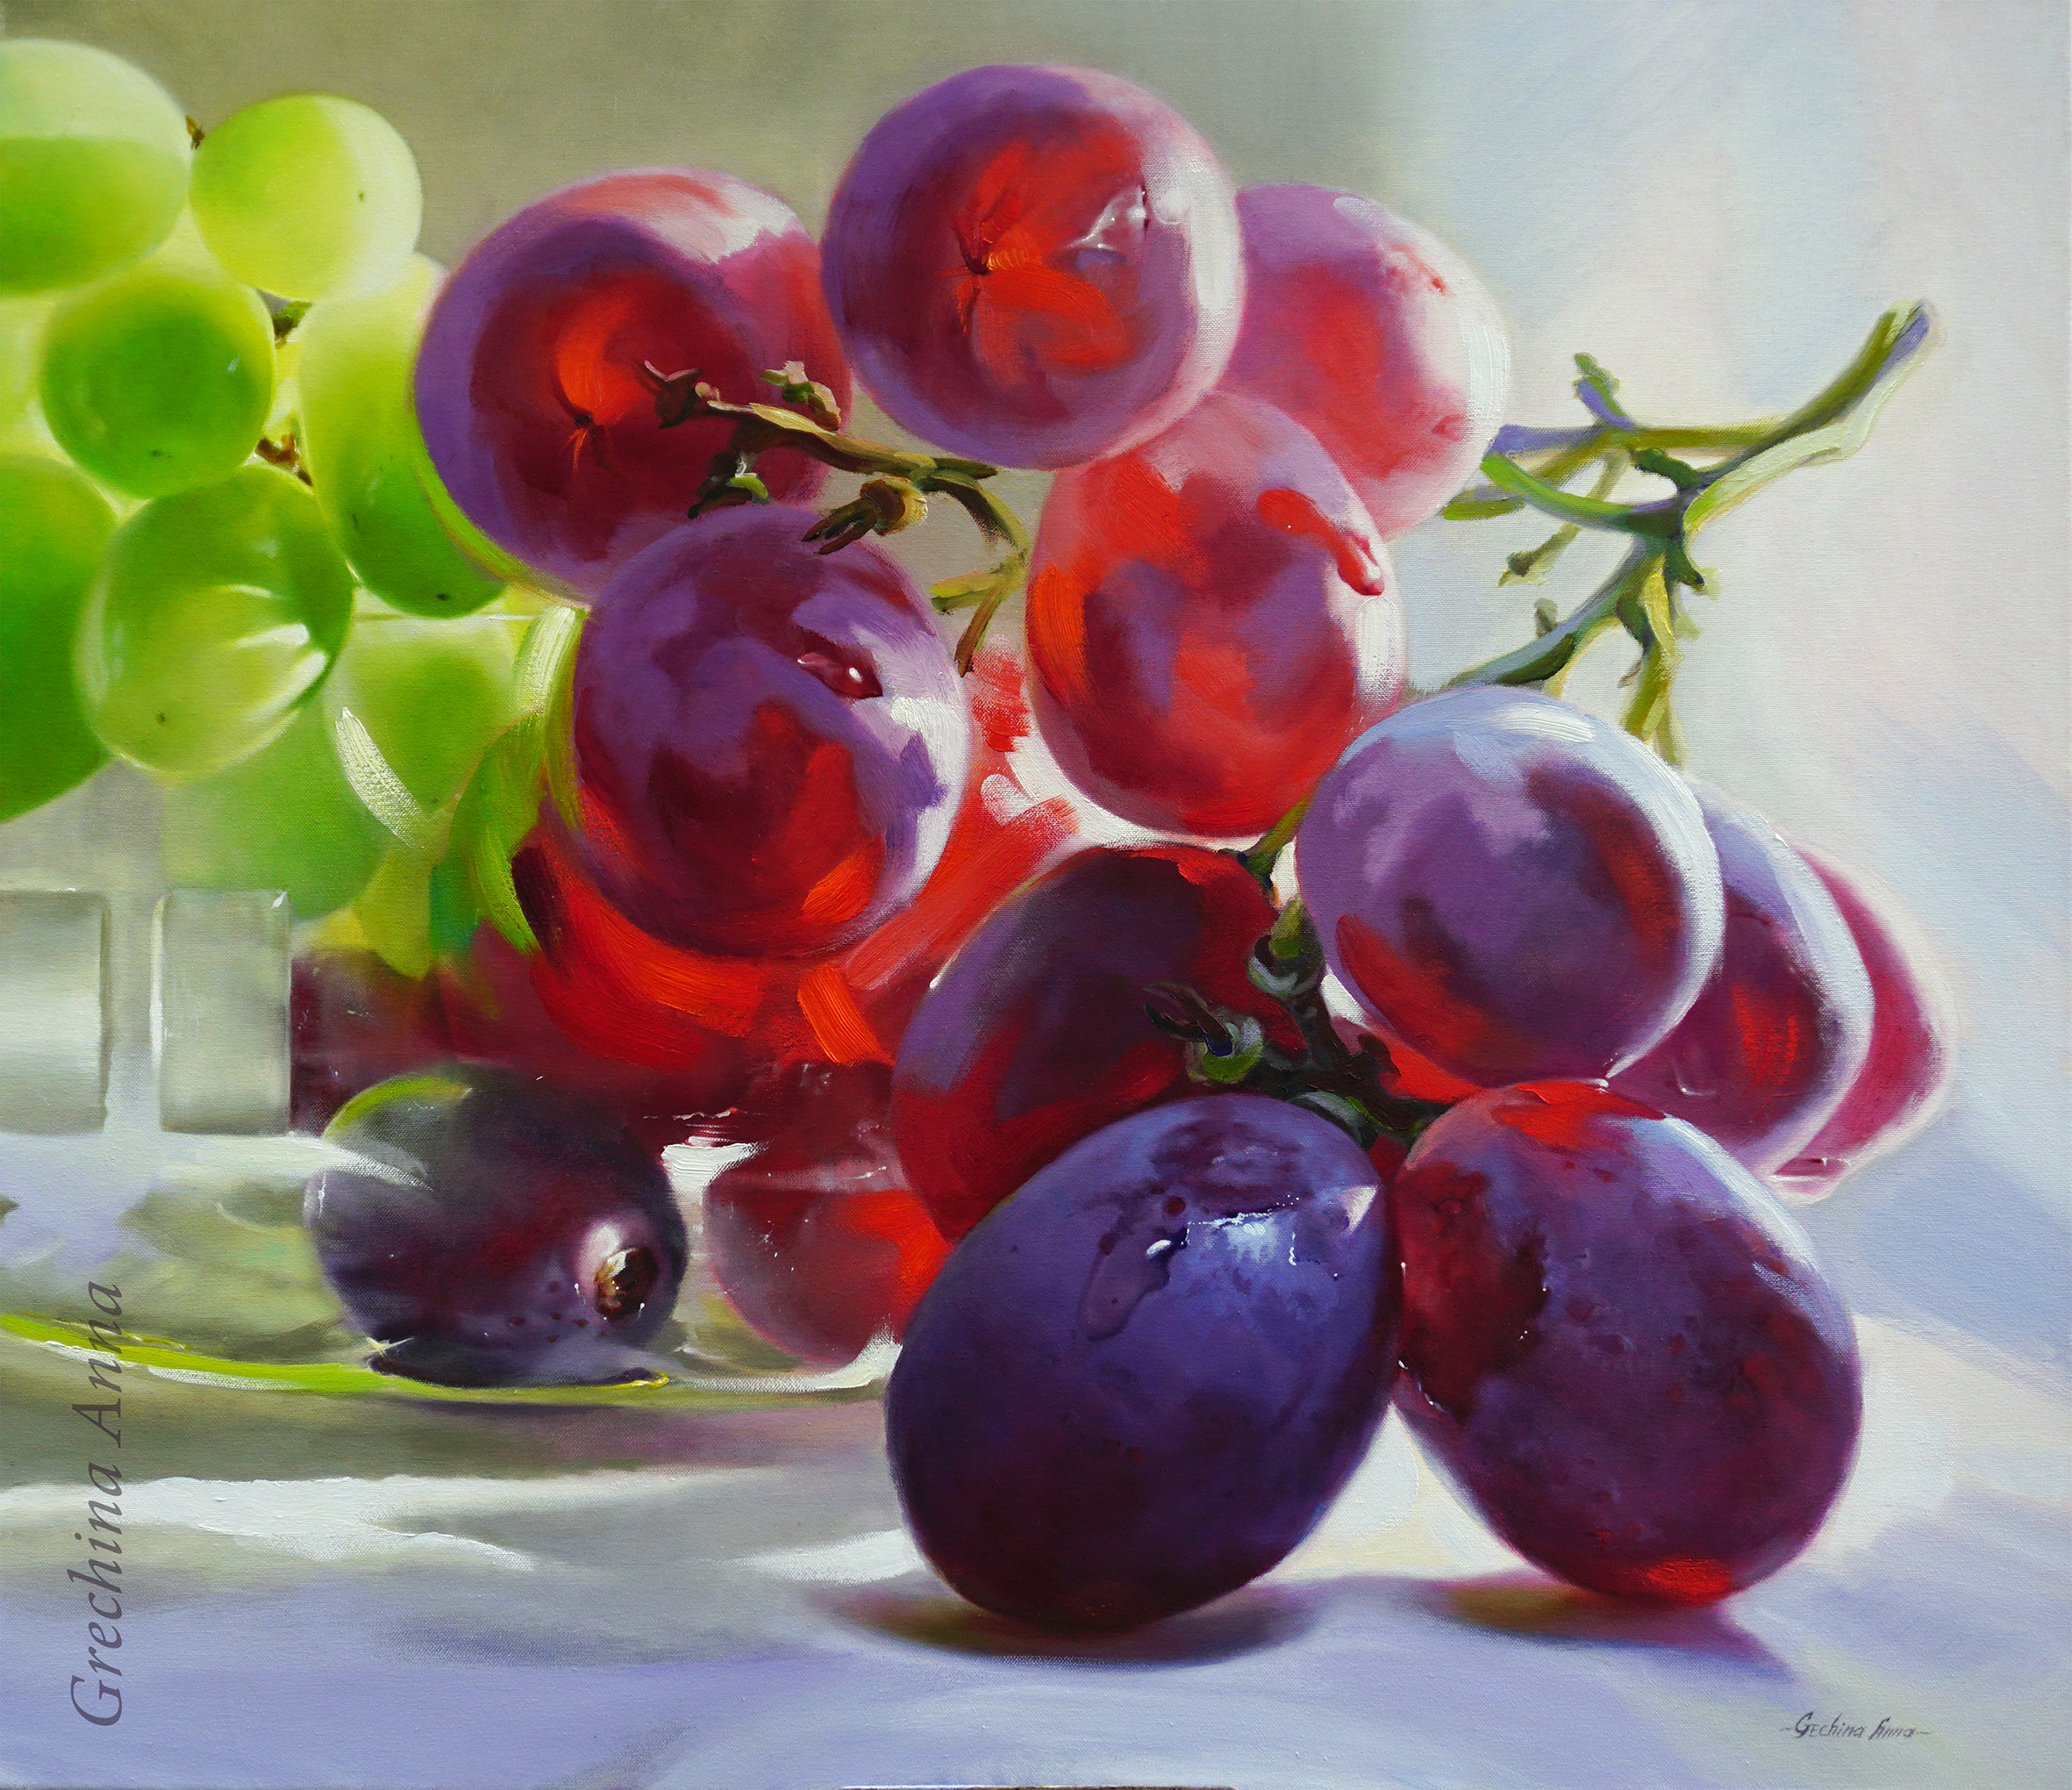 Grechina Anna painting. "Grapes and the sun". Still-life.